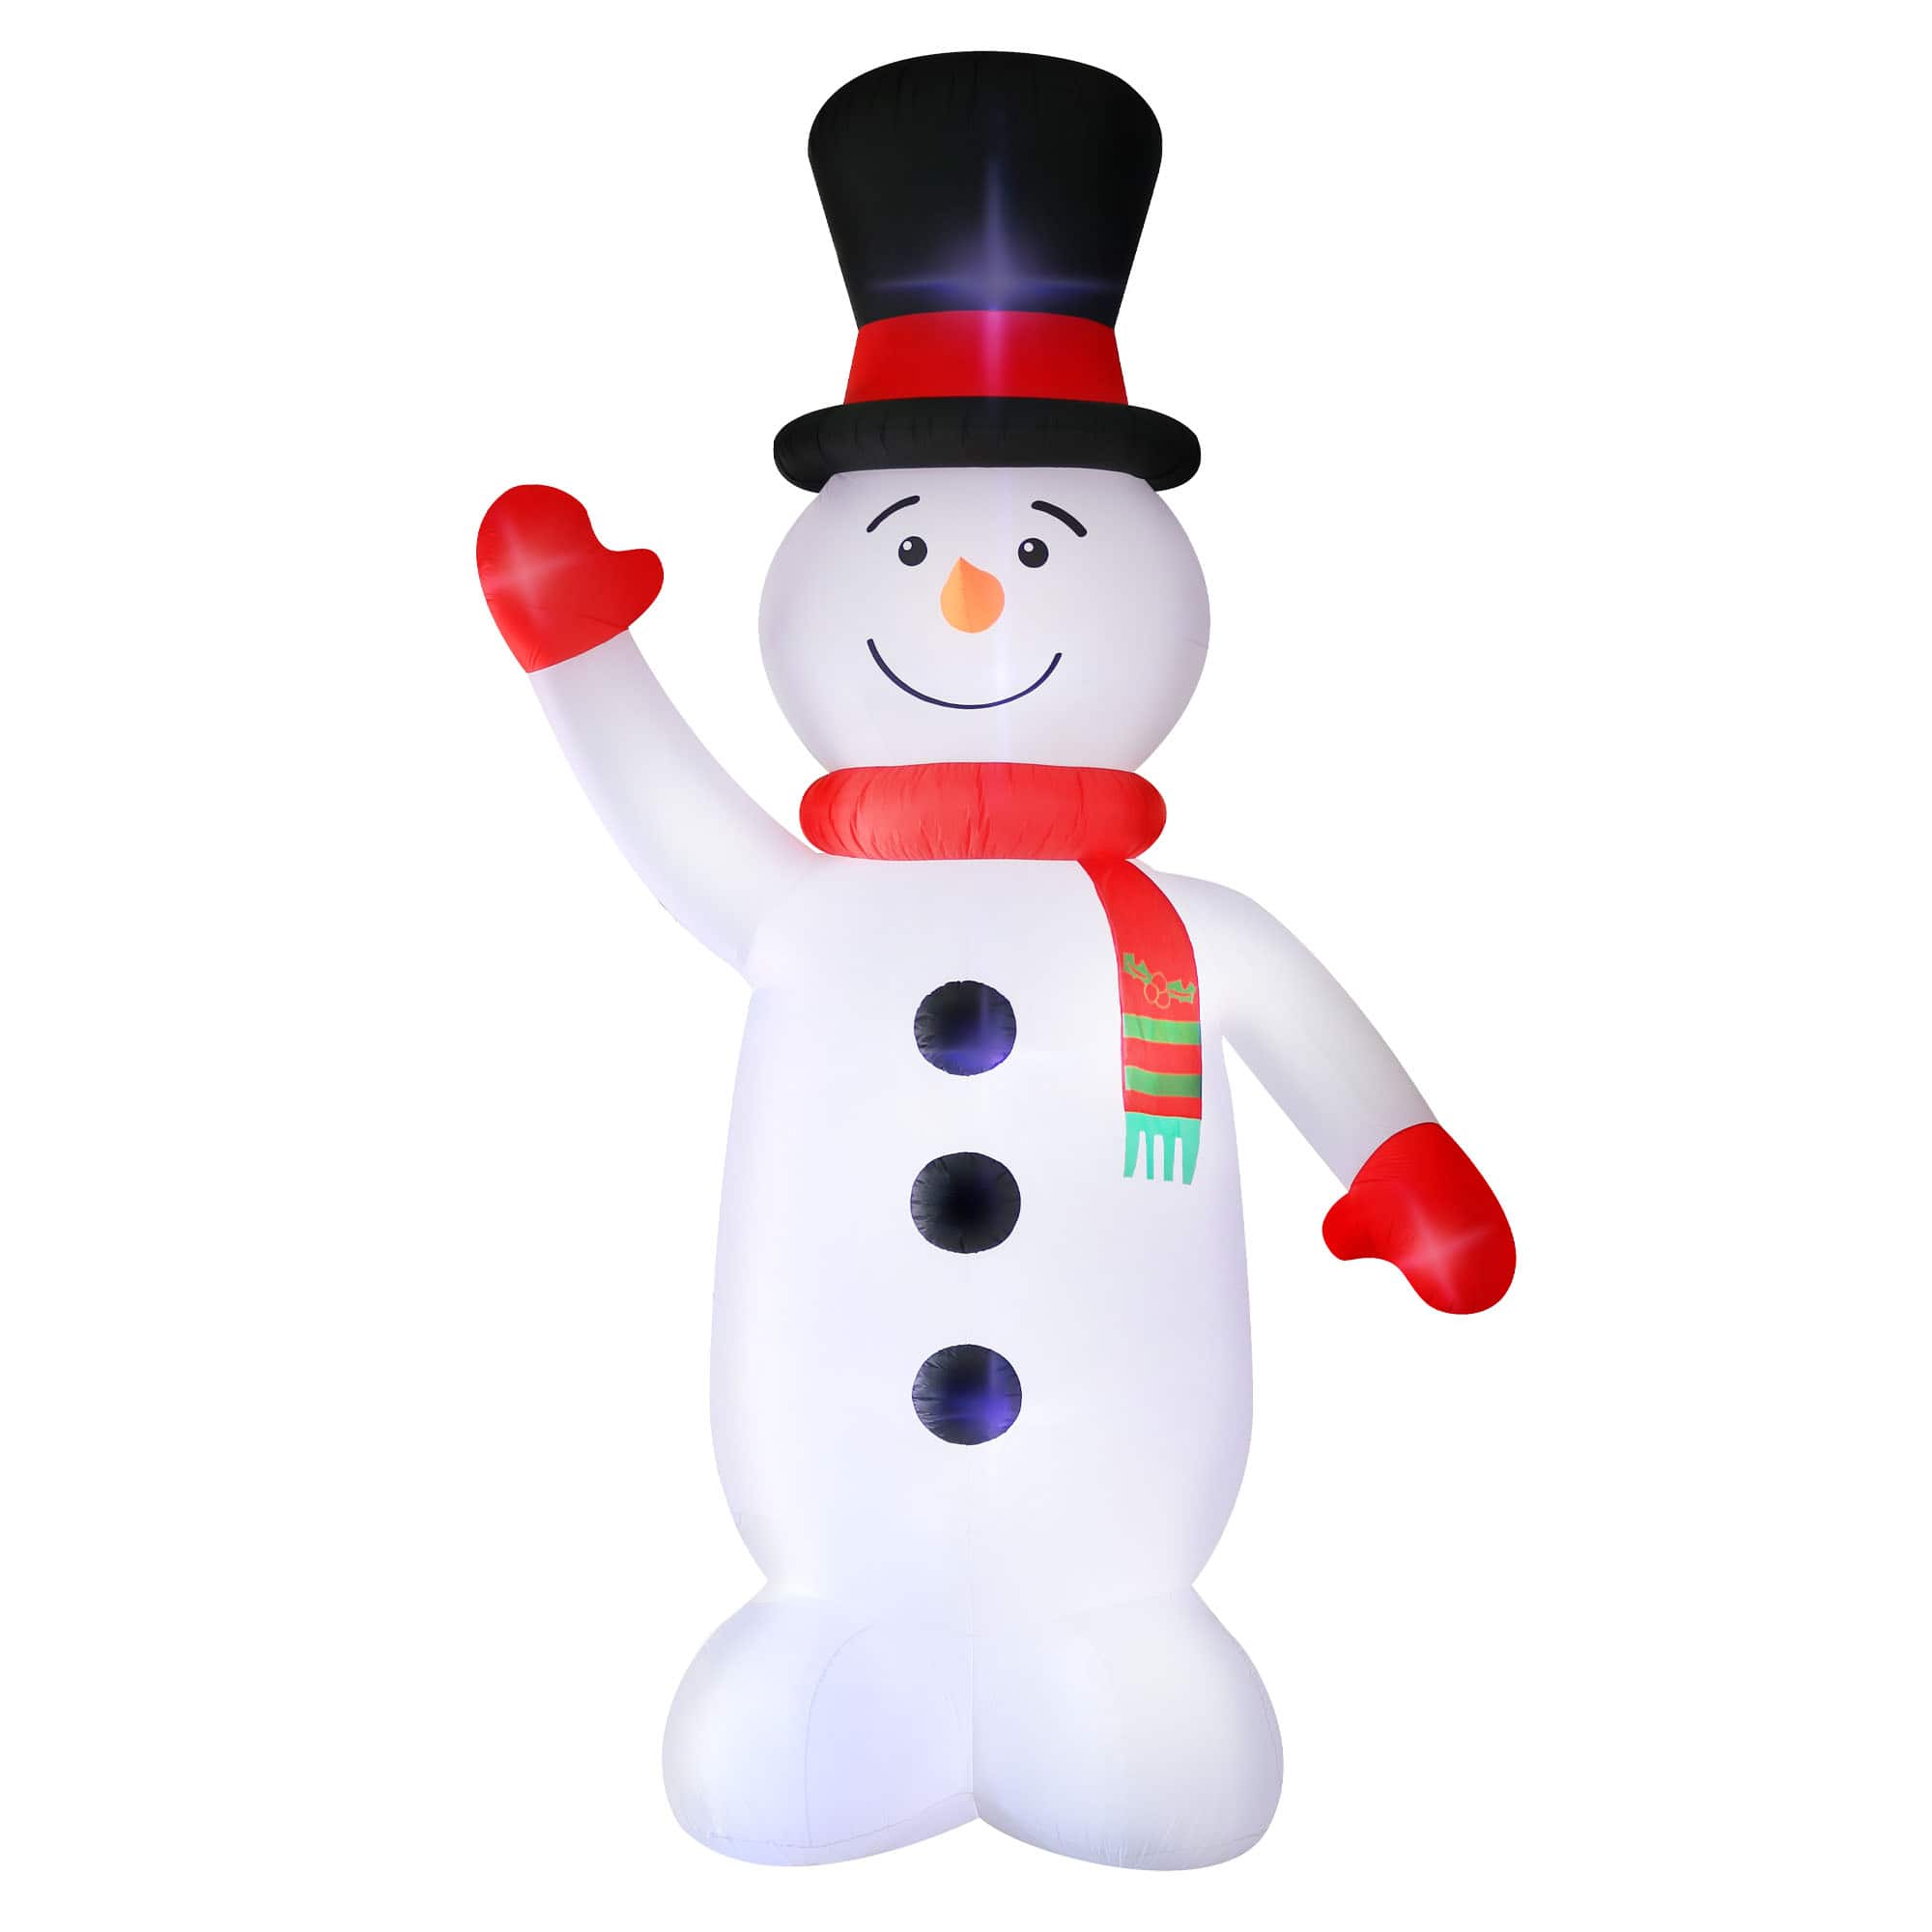 20ft. Inflatable Christmas Light Up Snowman